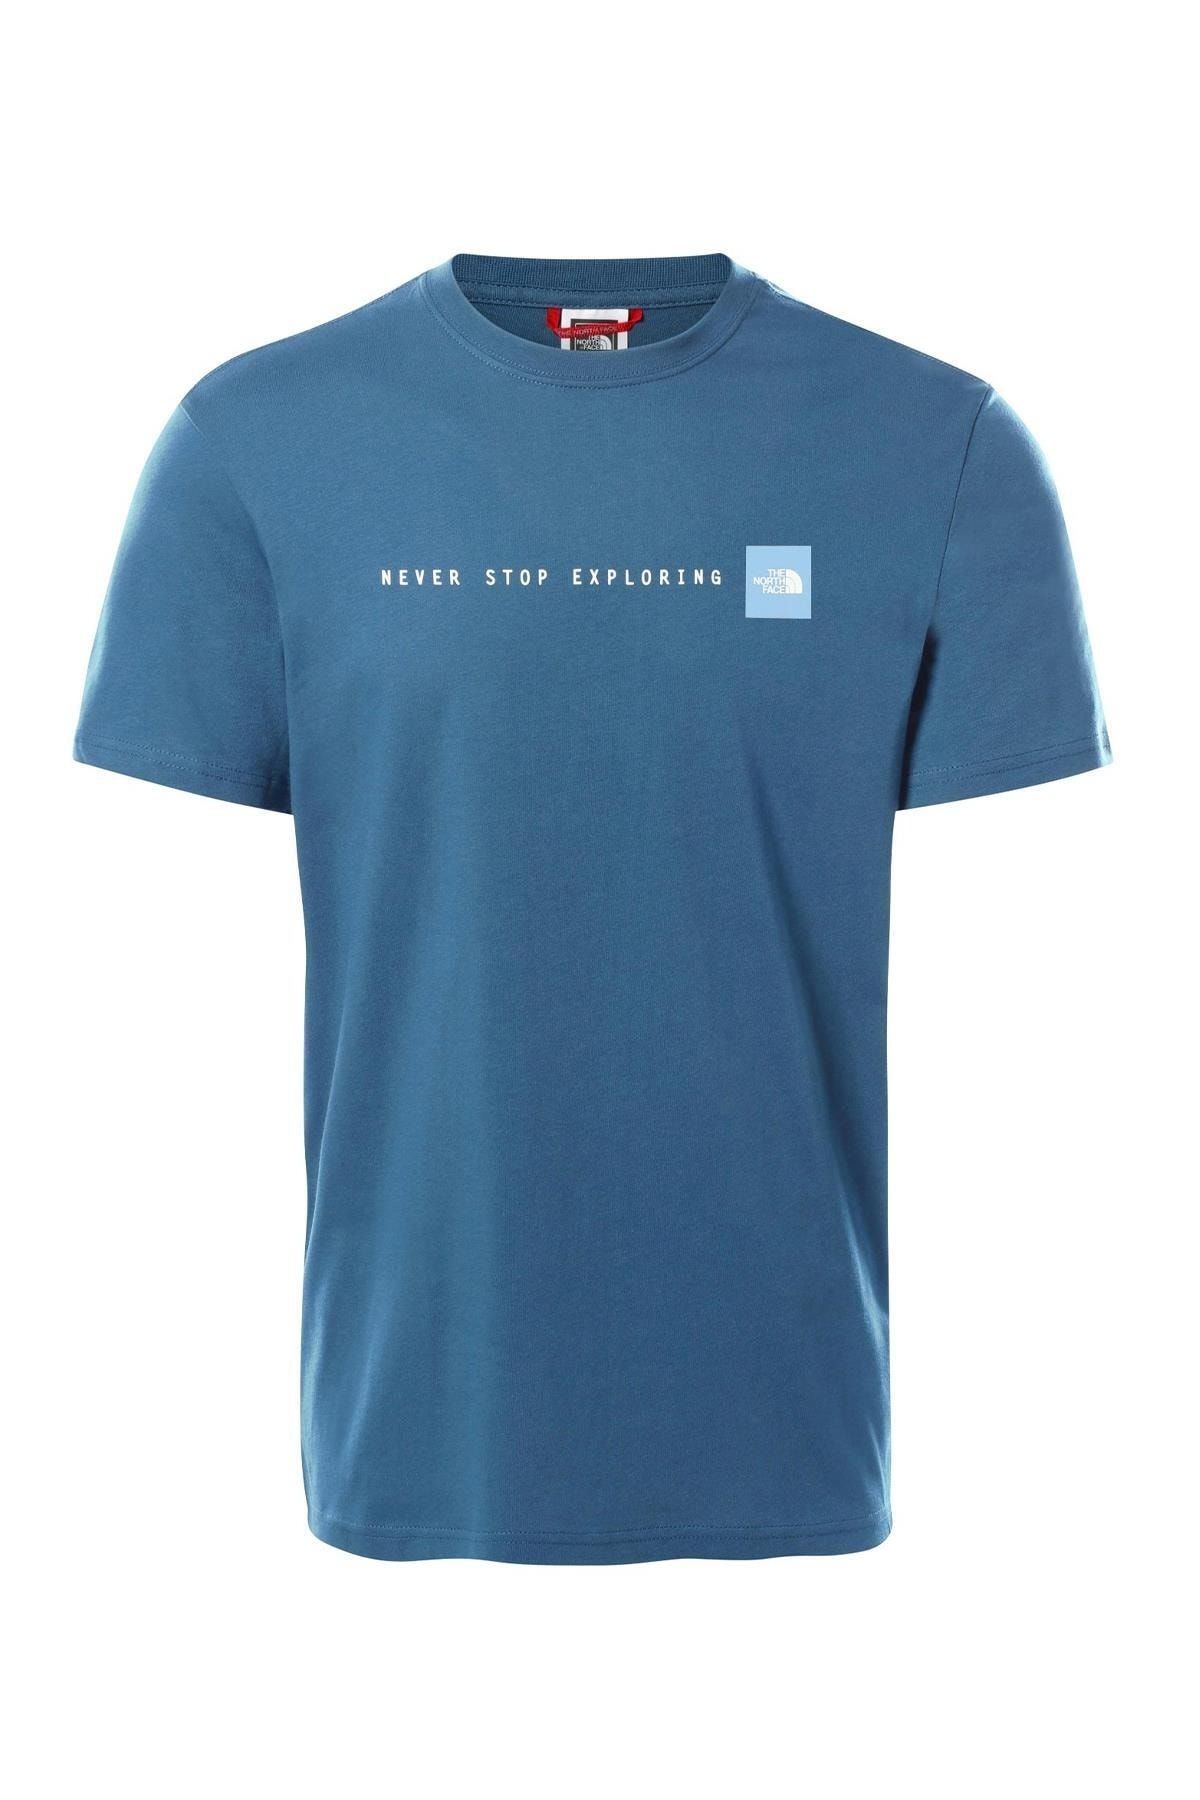 The North Face هرگز از کشف تی شرت مردانه آبی دست نکشید